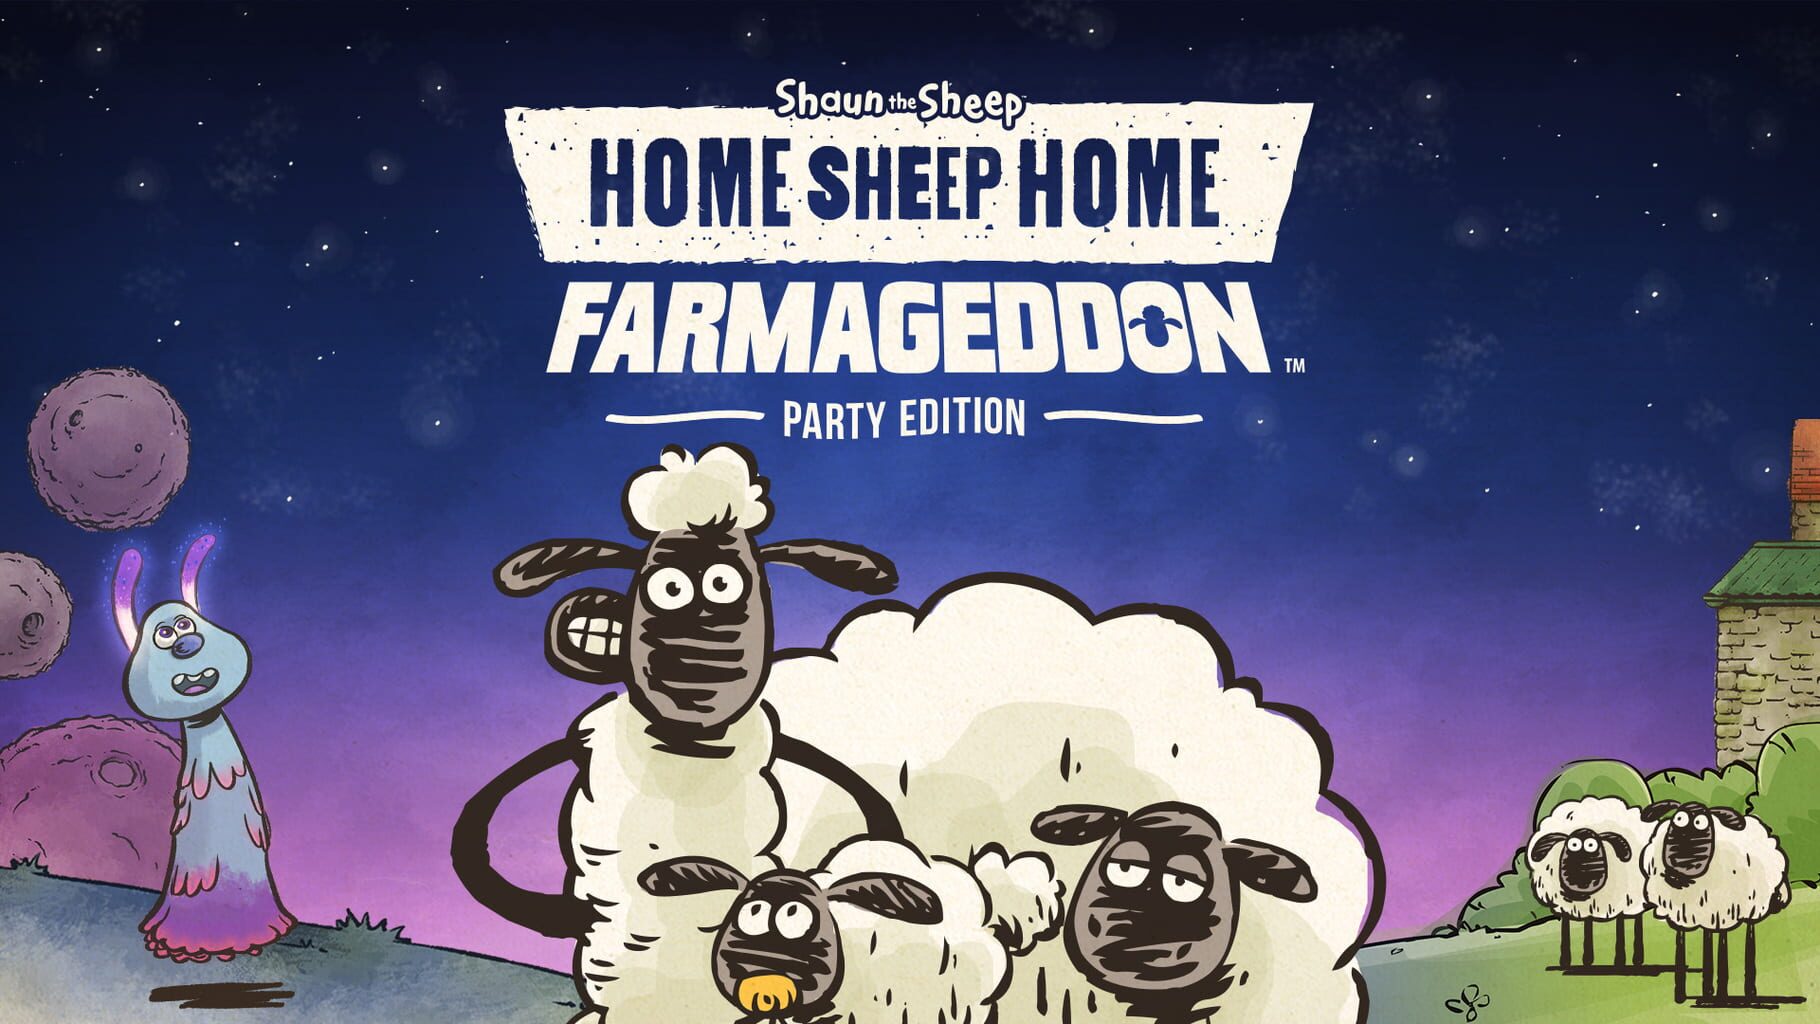 Home Sheep Home: Farmageddon Party Edition artwork